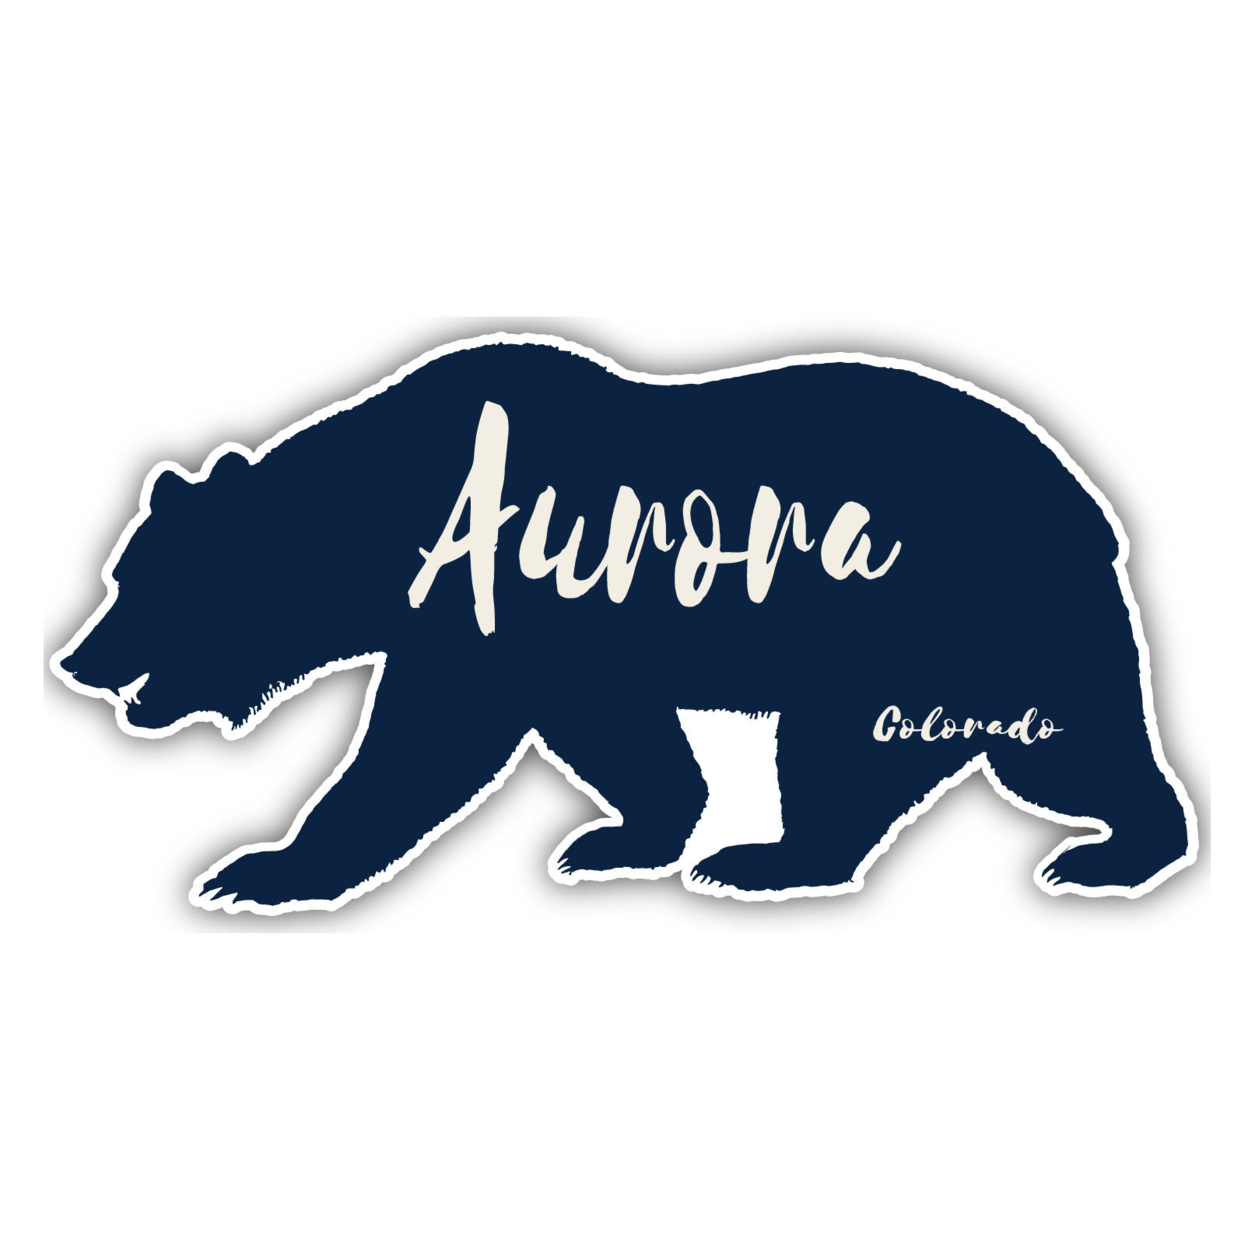 Aurora Colorado Souvenir Decorative Stickers (Choose Theme And Size) - 4-Pack, 2-Inch, Bear